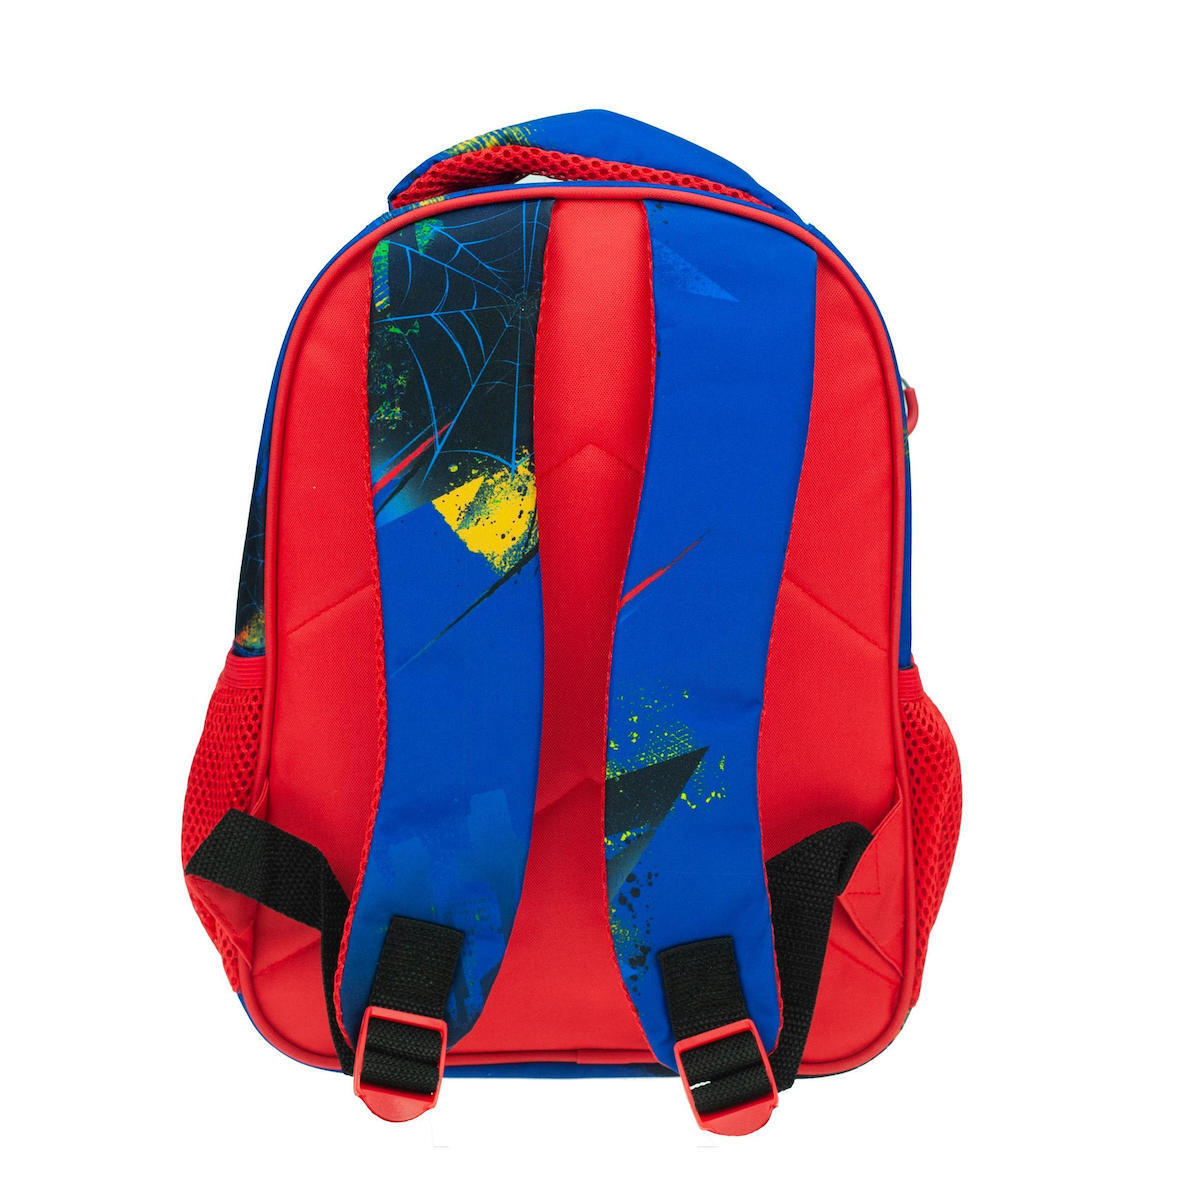 Gim Σχολική Τσάντα Πλάτης Νηπιαγωγείου Spiderman Blue Net (337-04054)